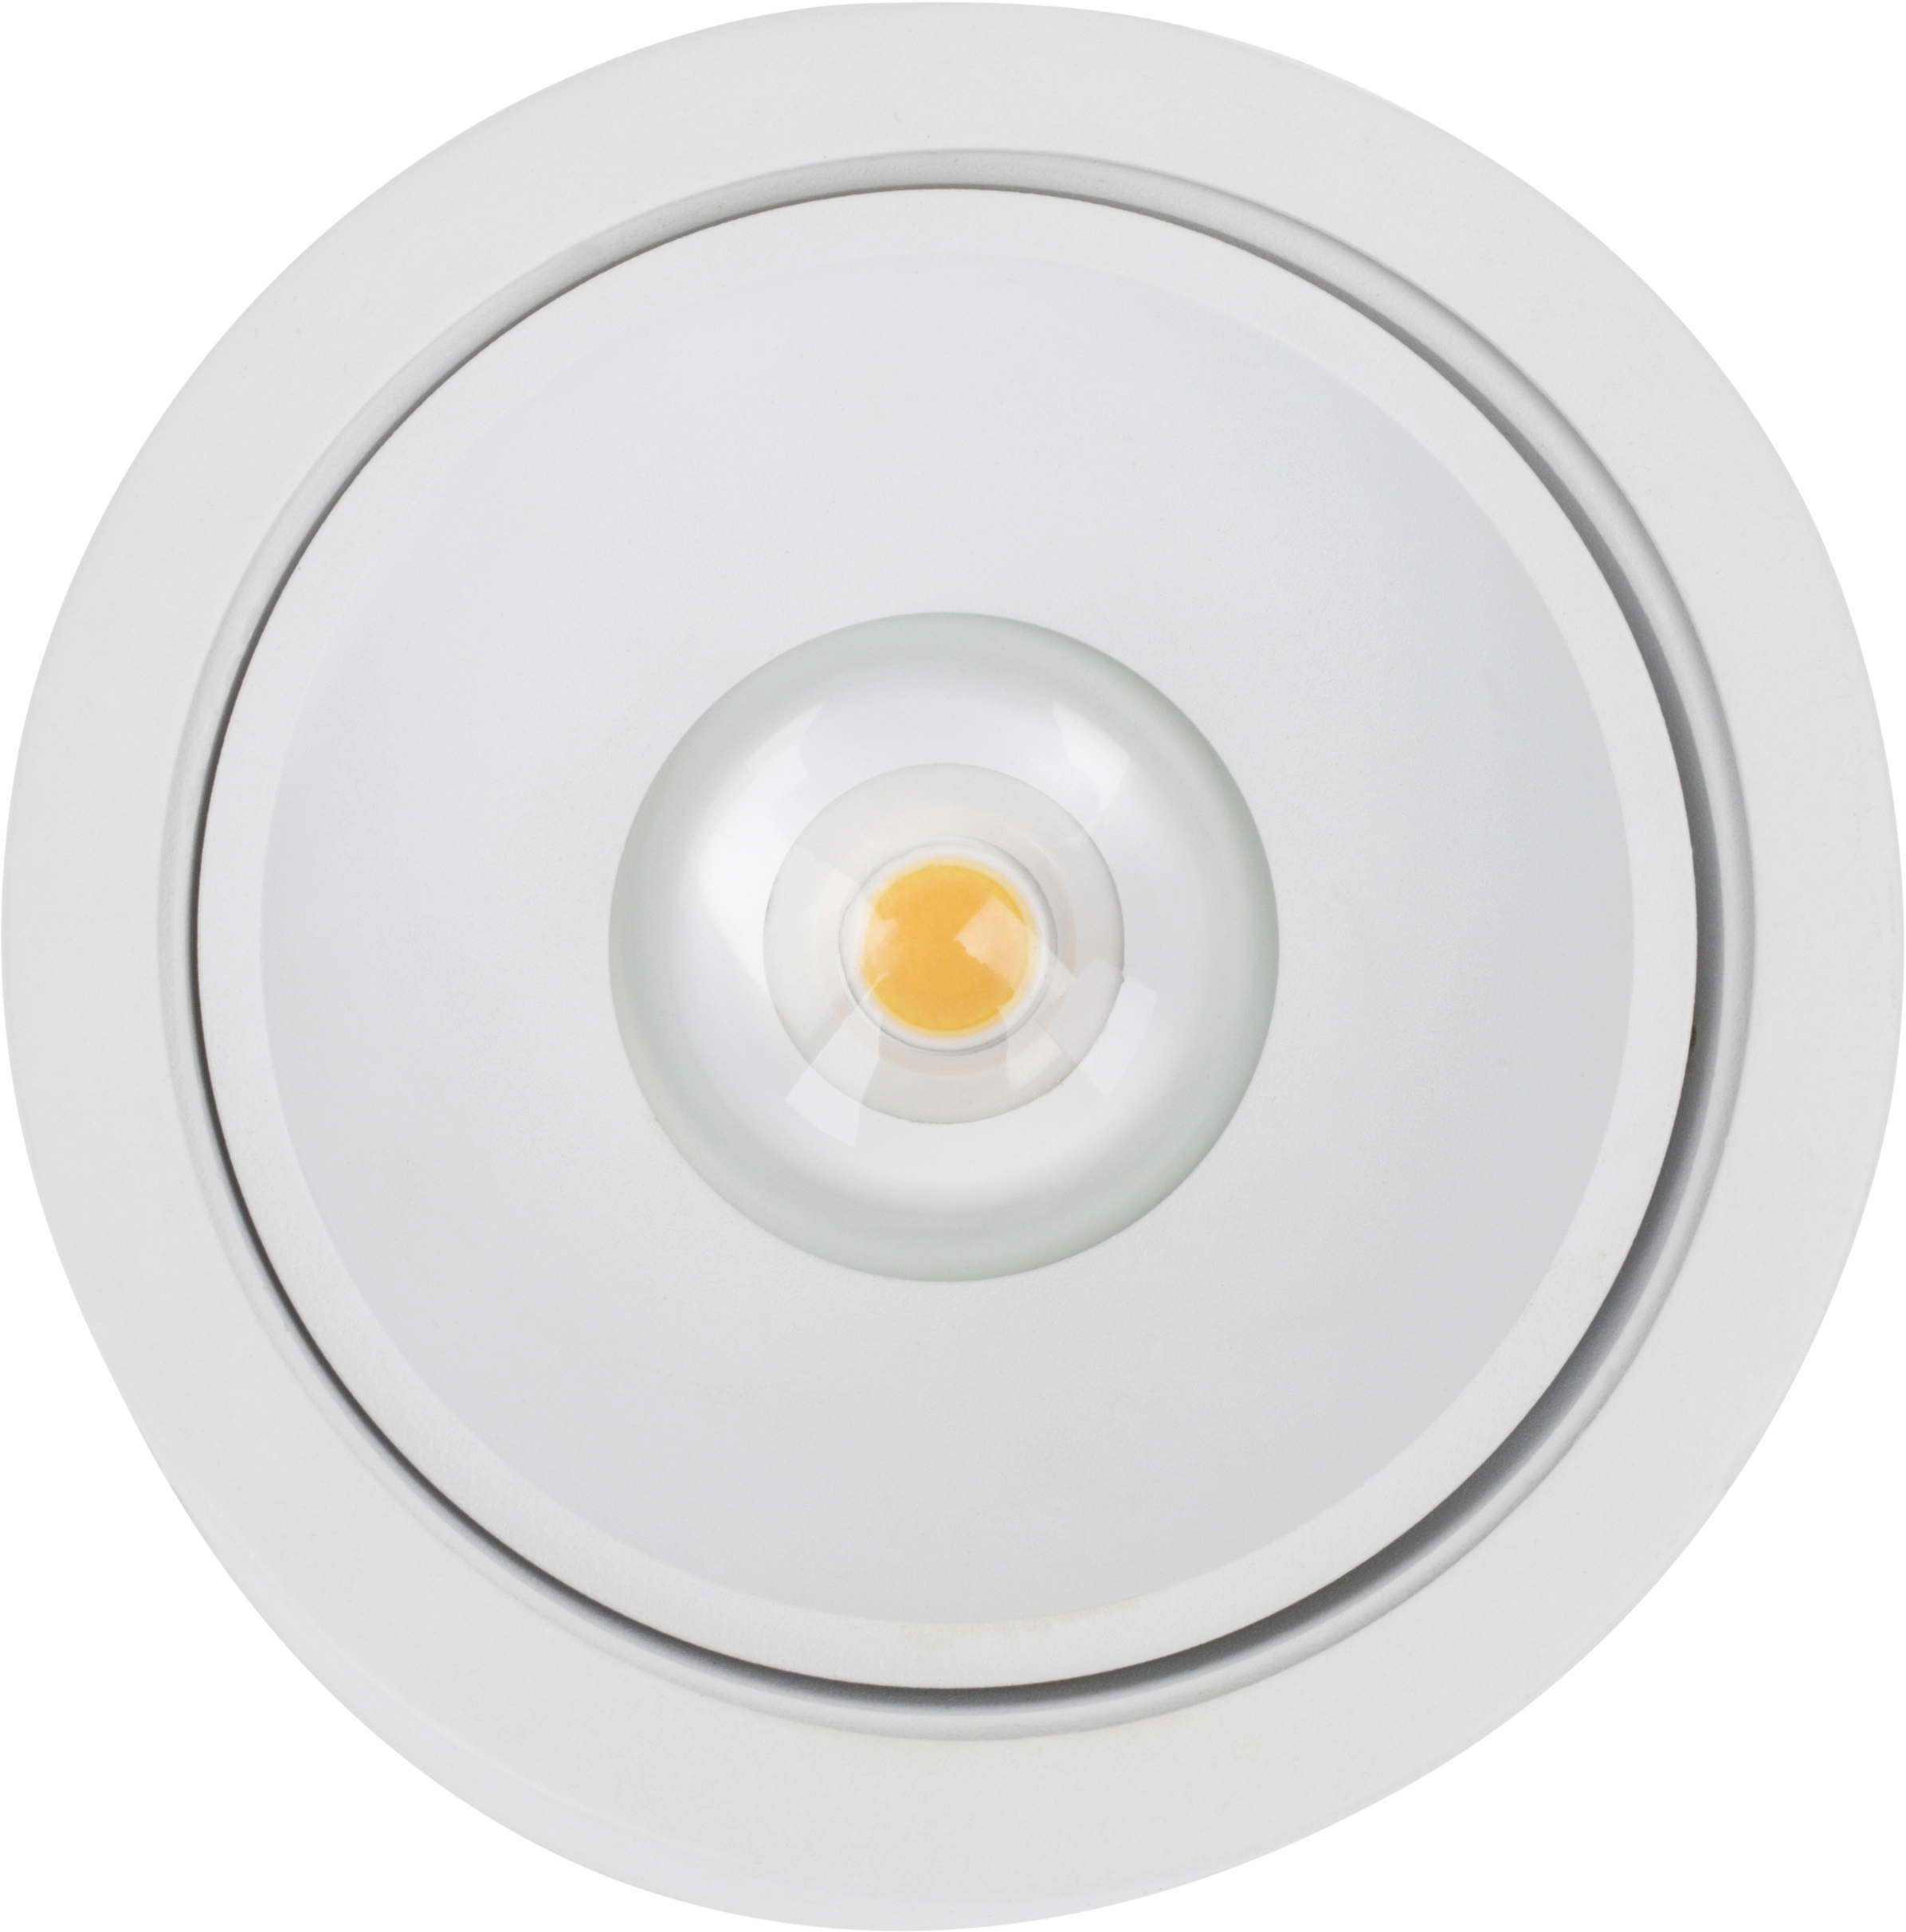 AEG LED-Spot Leca dimmbar und schwenkbar 9 cm x Ø 12,8 cm kaufen bei OBI